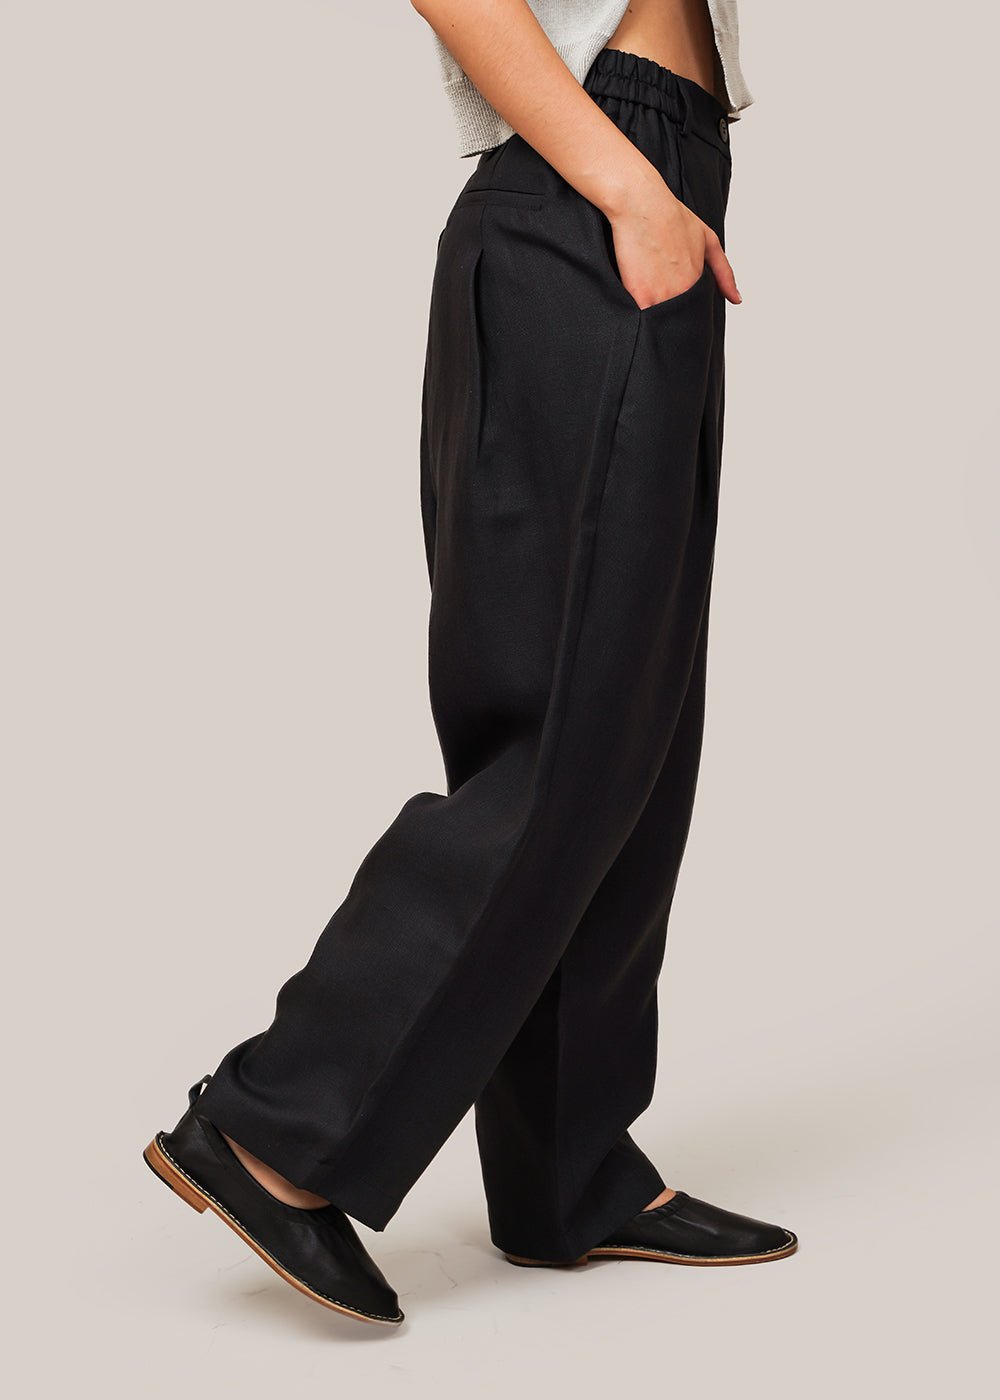 New Age Linen Pants in Black by CORDERA – New Classics Studios